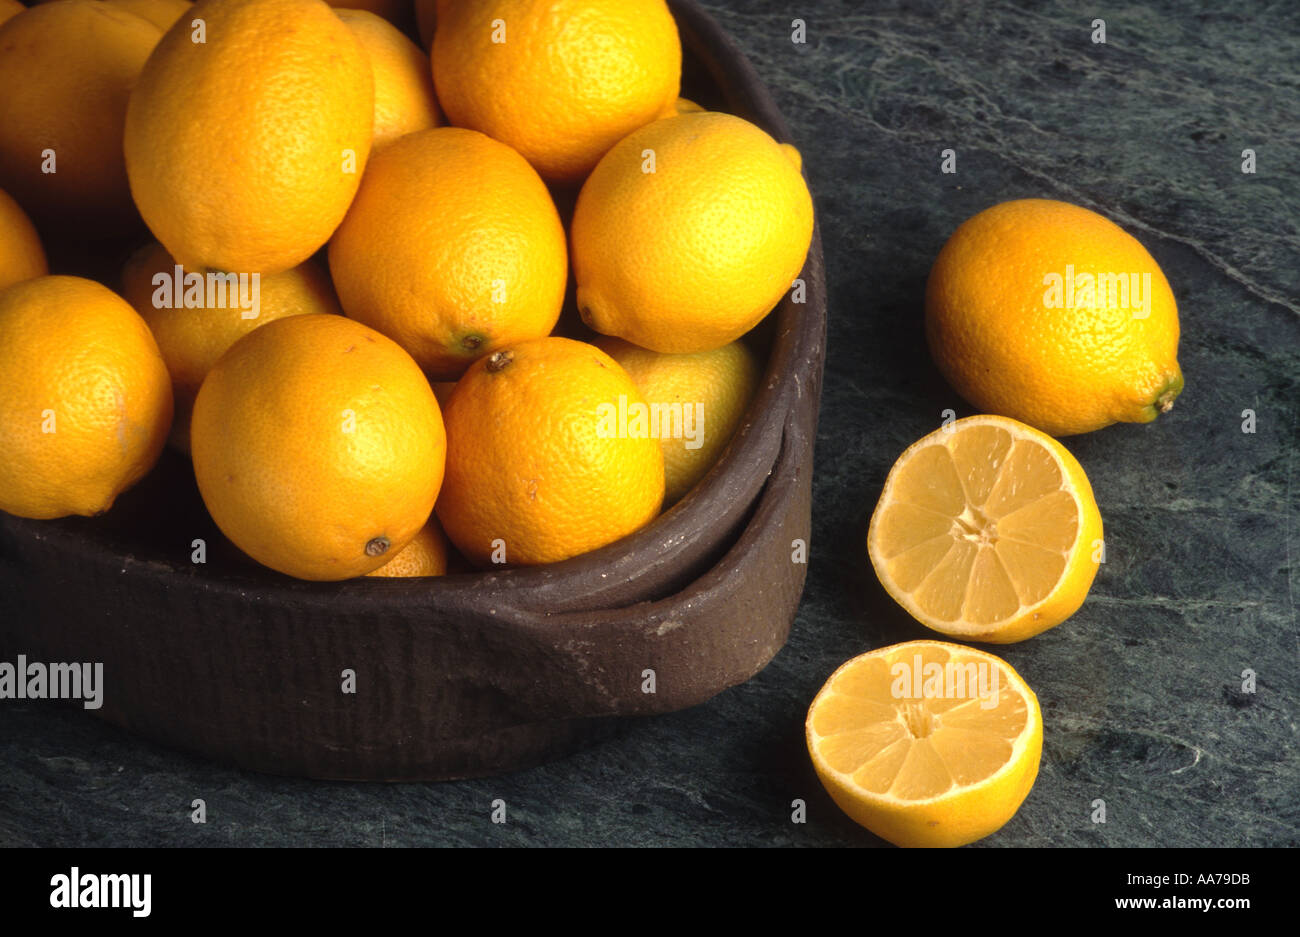 Agrumi frutta limone limoni limone alimentare zitronen giallo acido acida Foto Stock